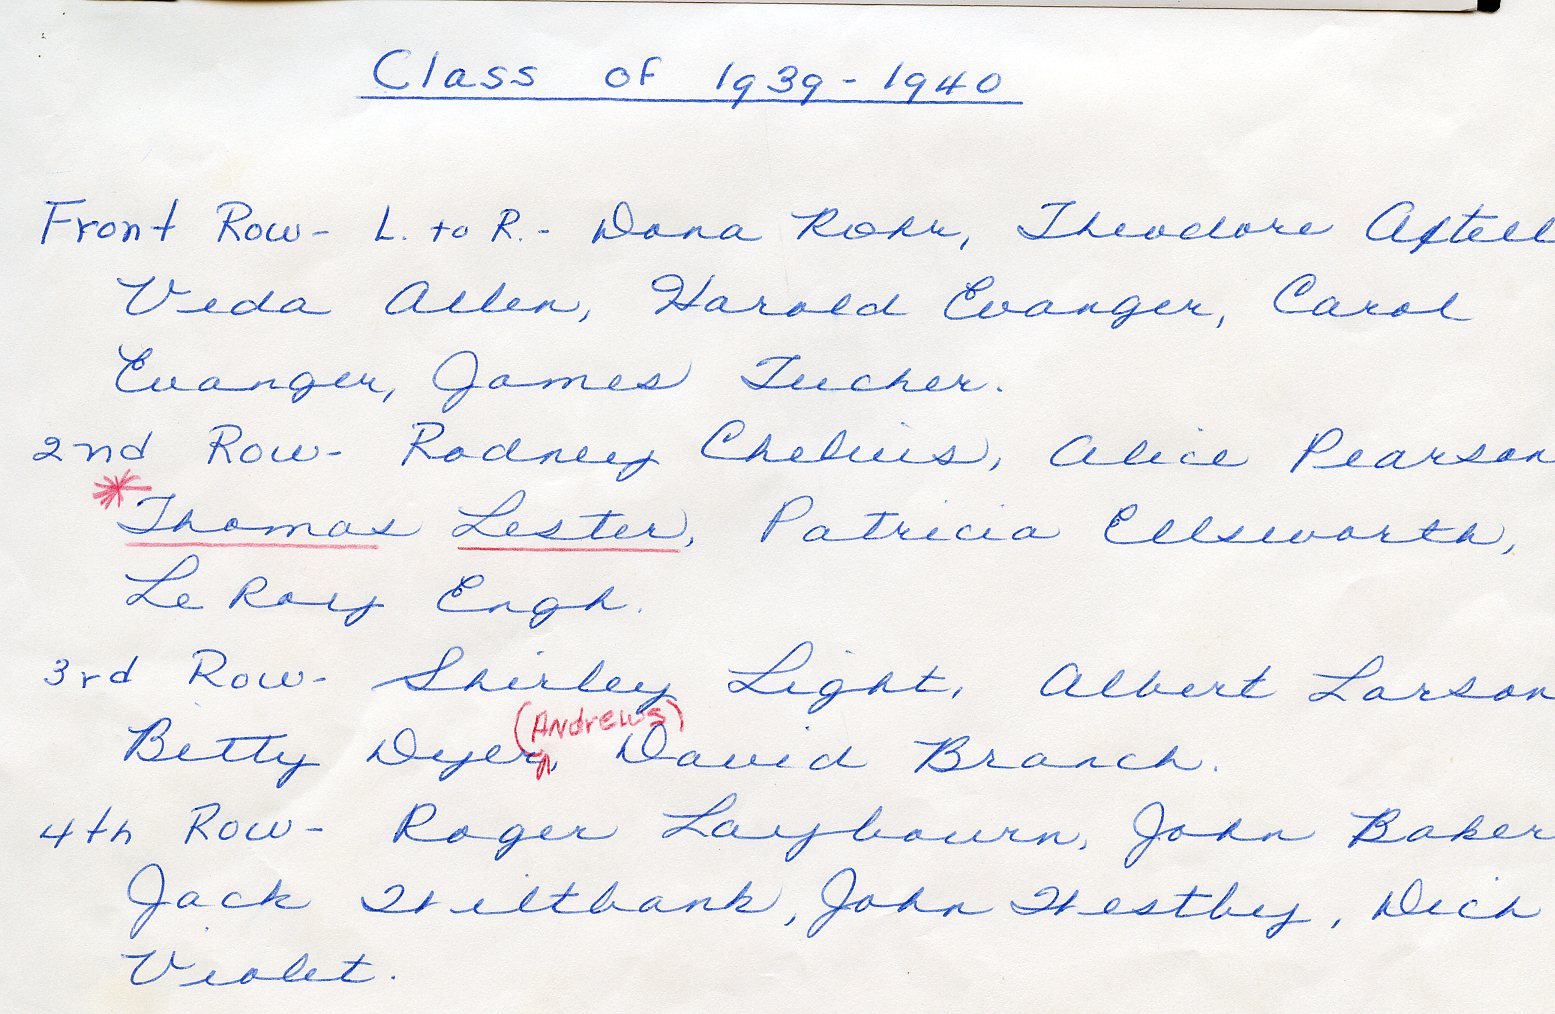 1940 8th names